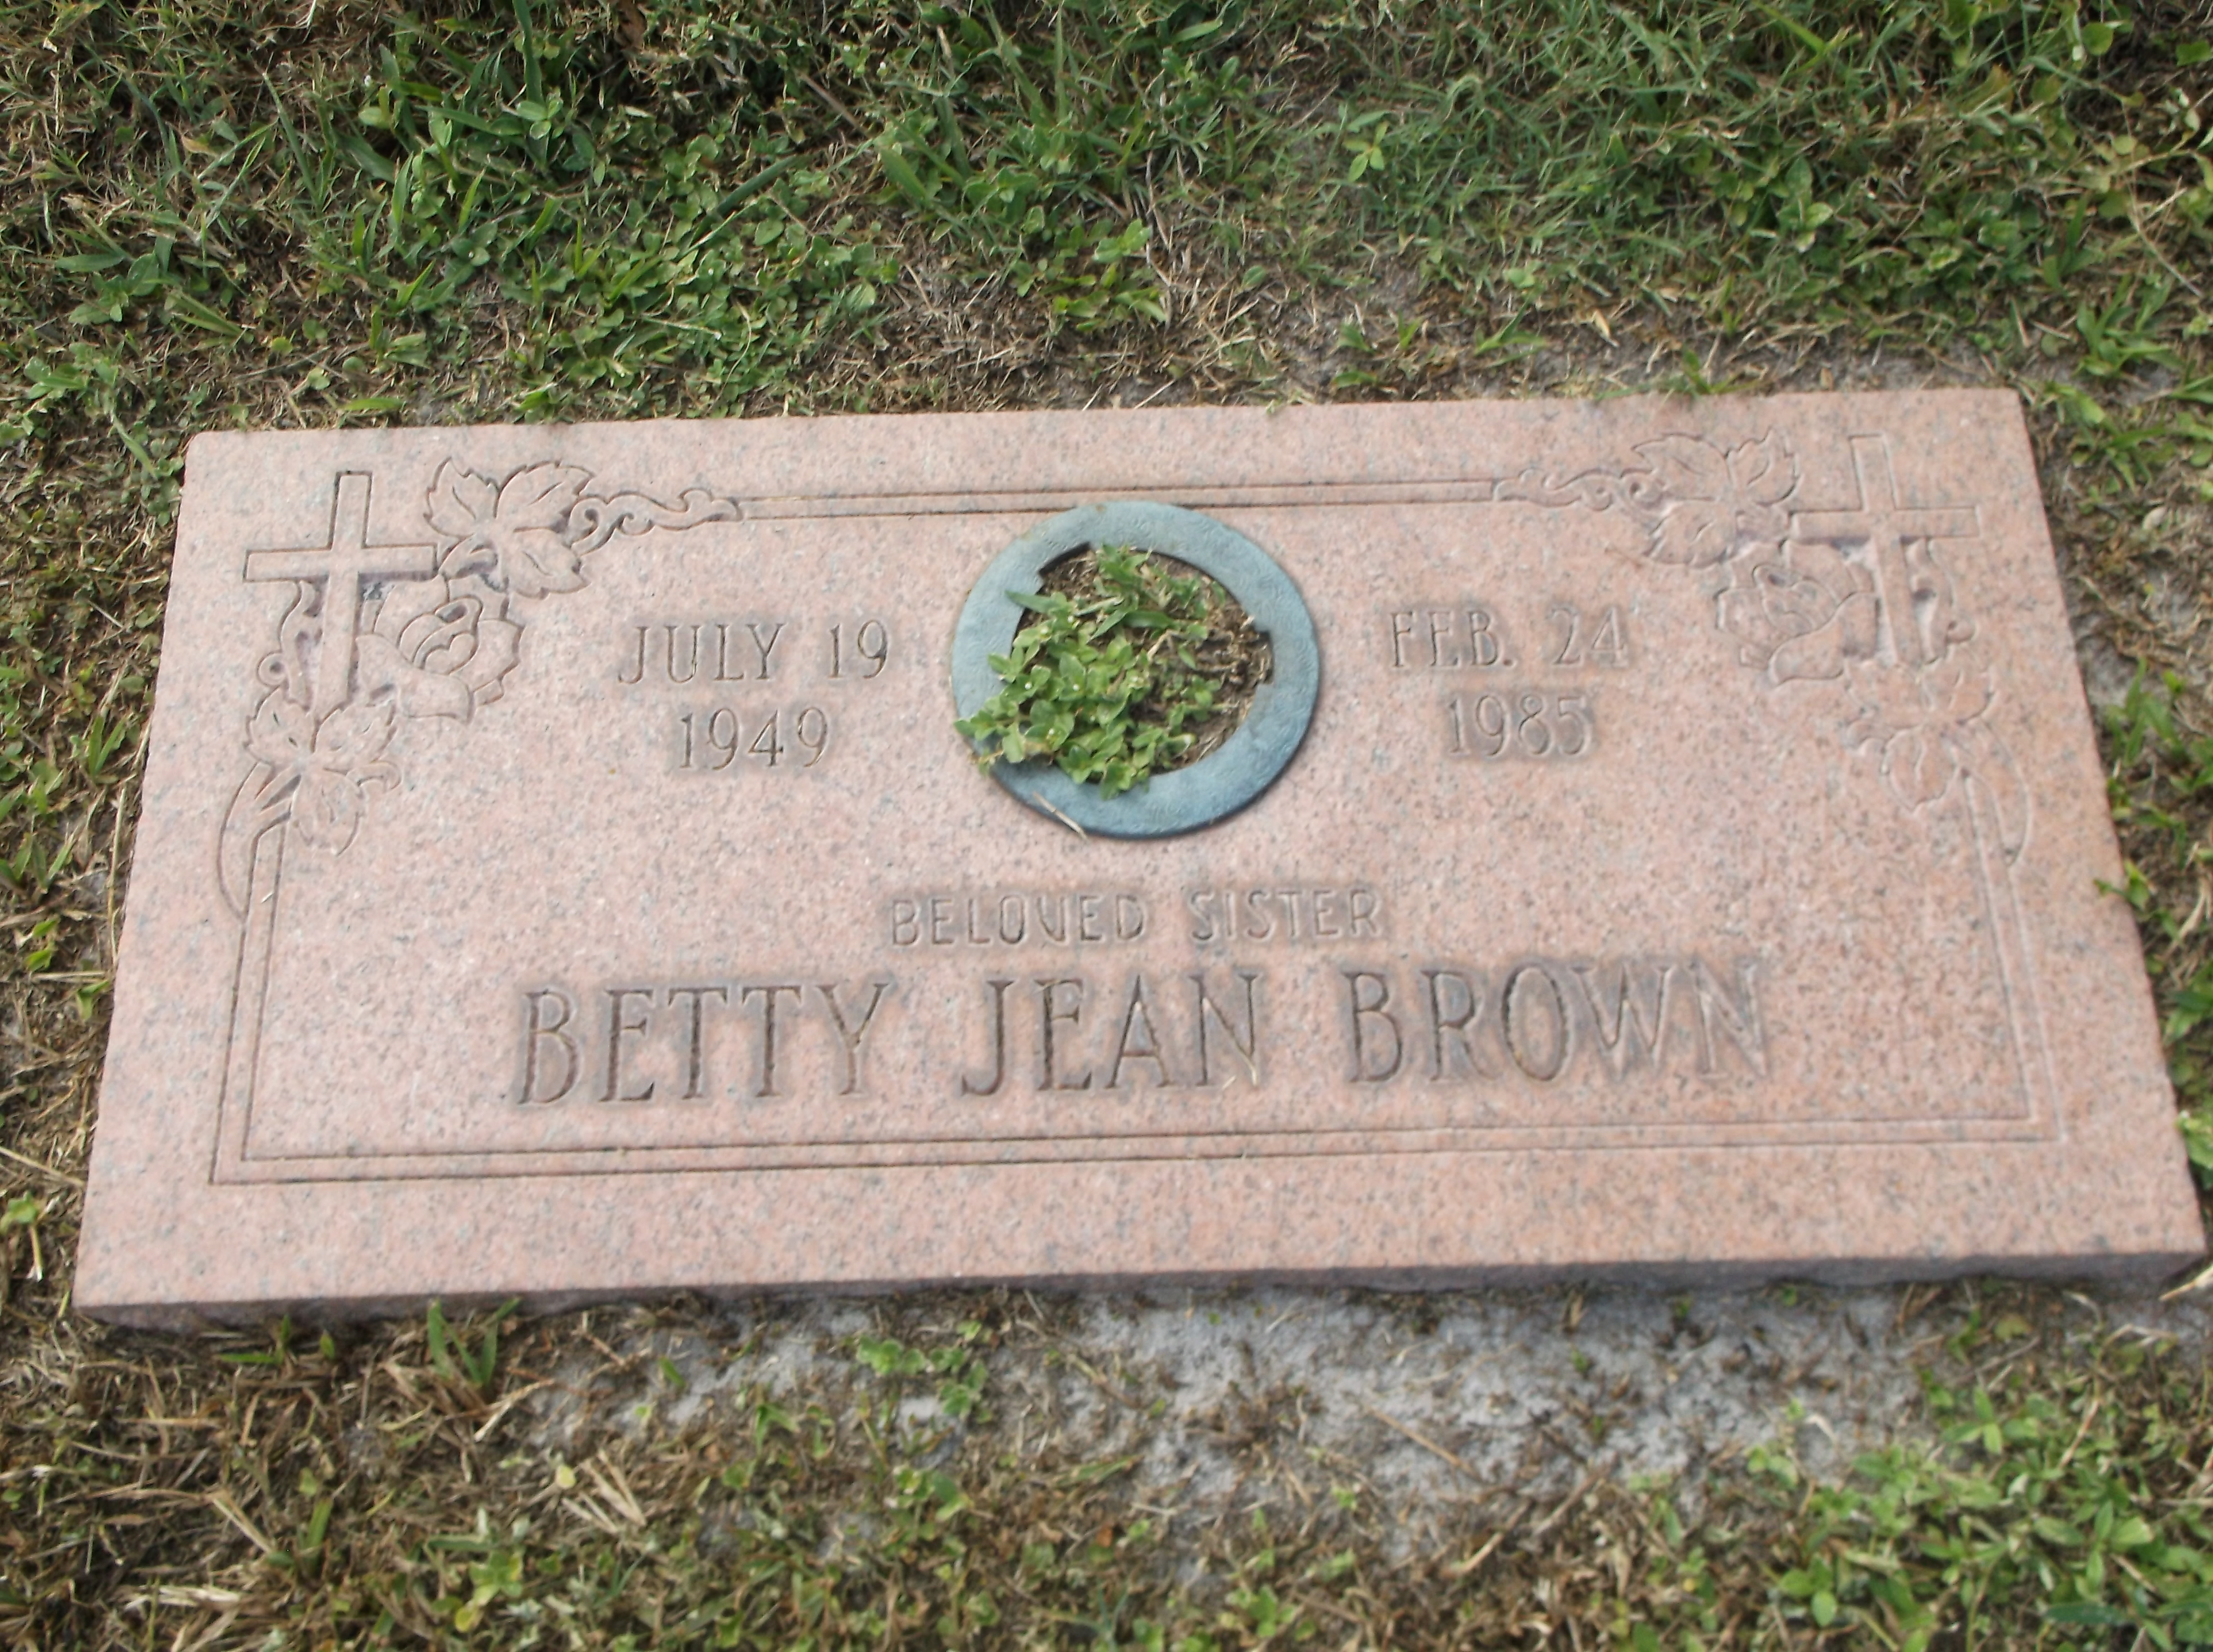 Betty Jean Brown